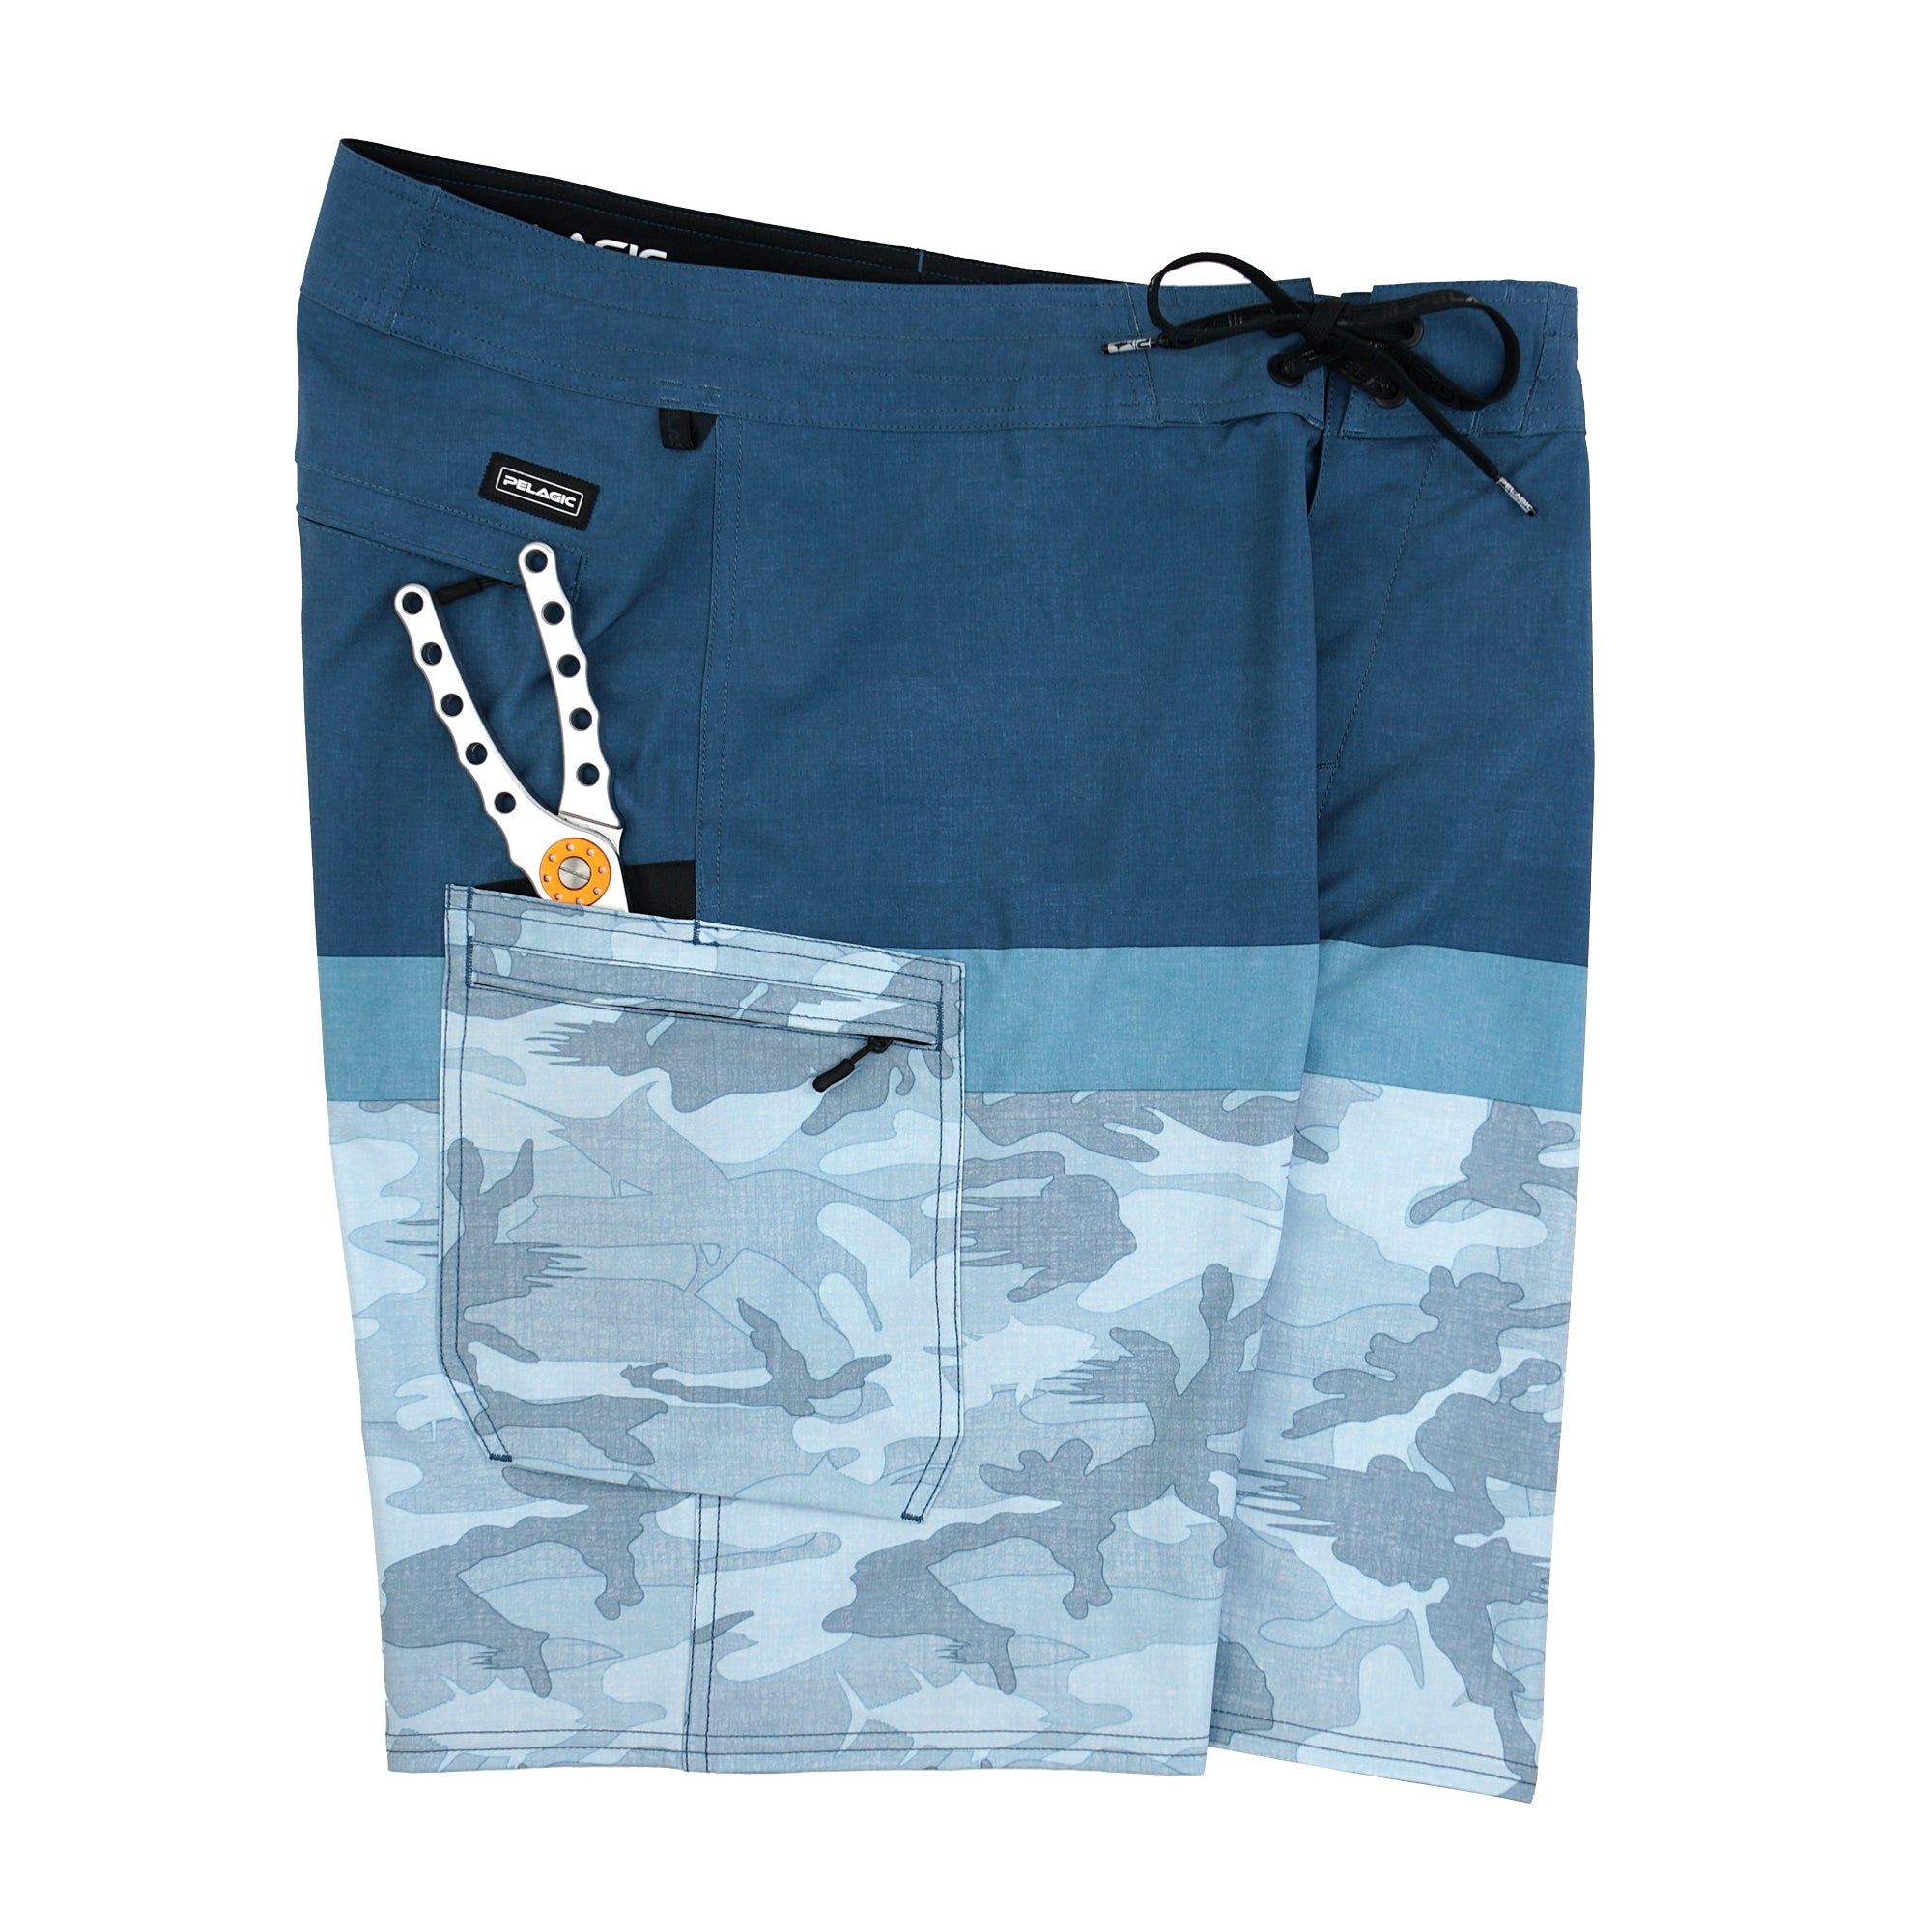 Pelagic Blue Water Fish Camo Stacked Fishing Shorts - Black - 38